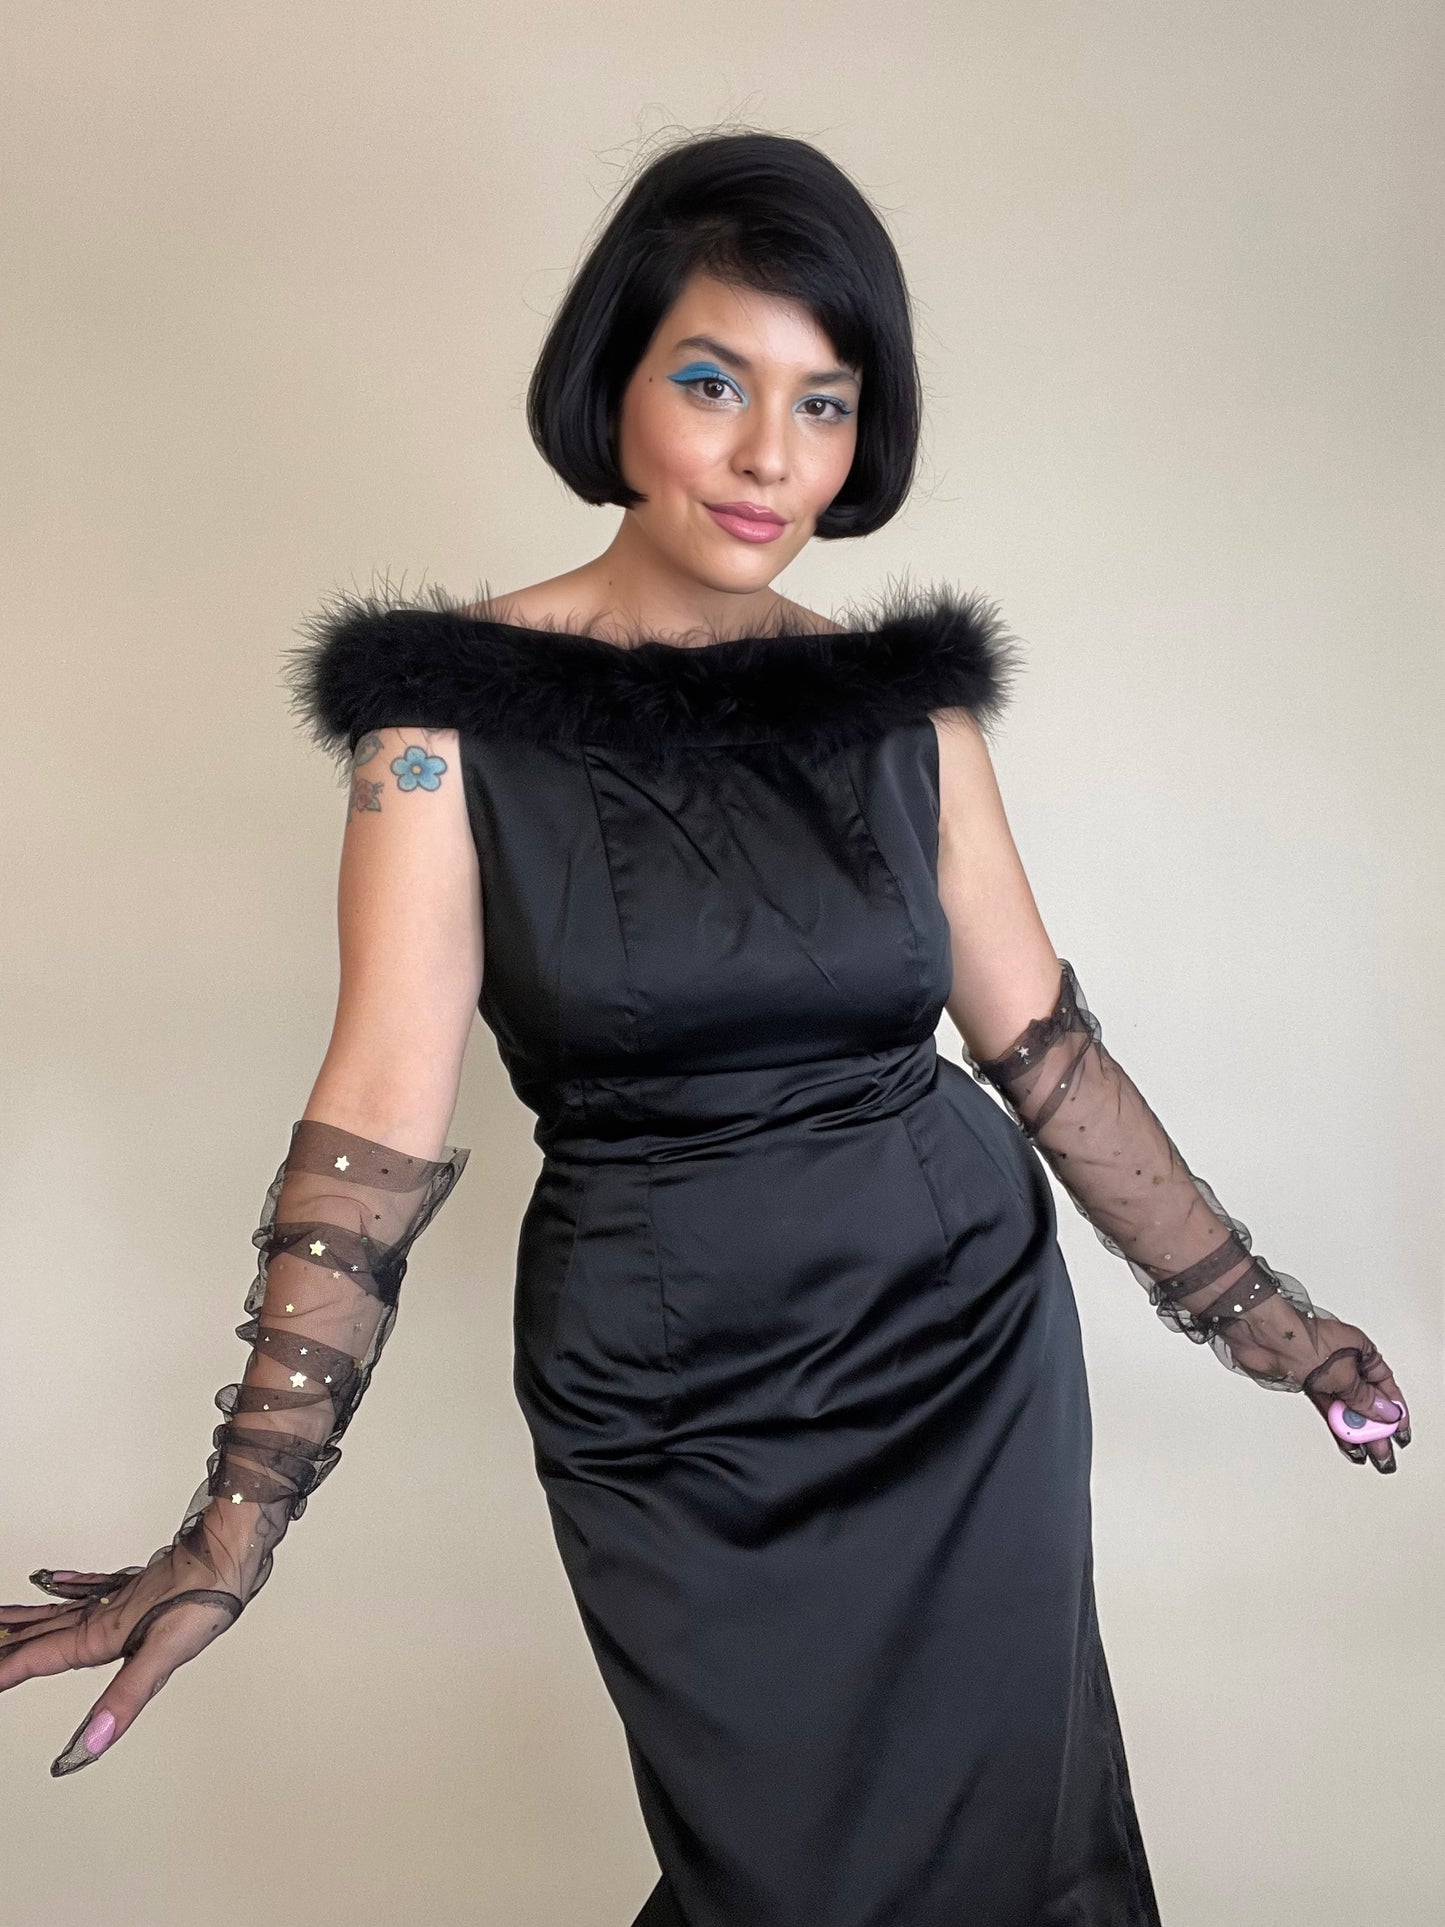 Vintage 50s 60s Couture Black Marabou Feather Wiggle Dress Fits Sizes XXS-S